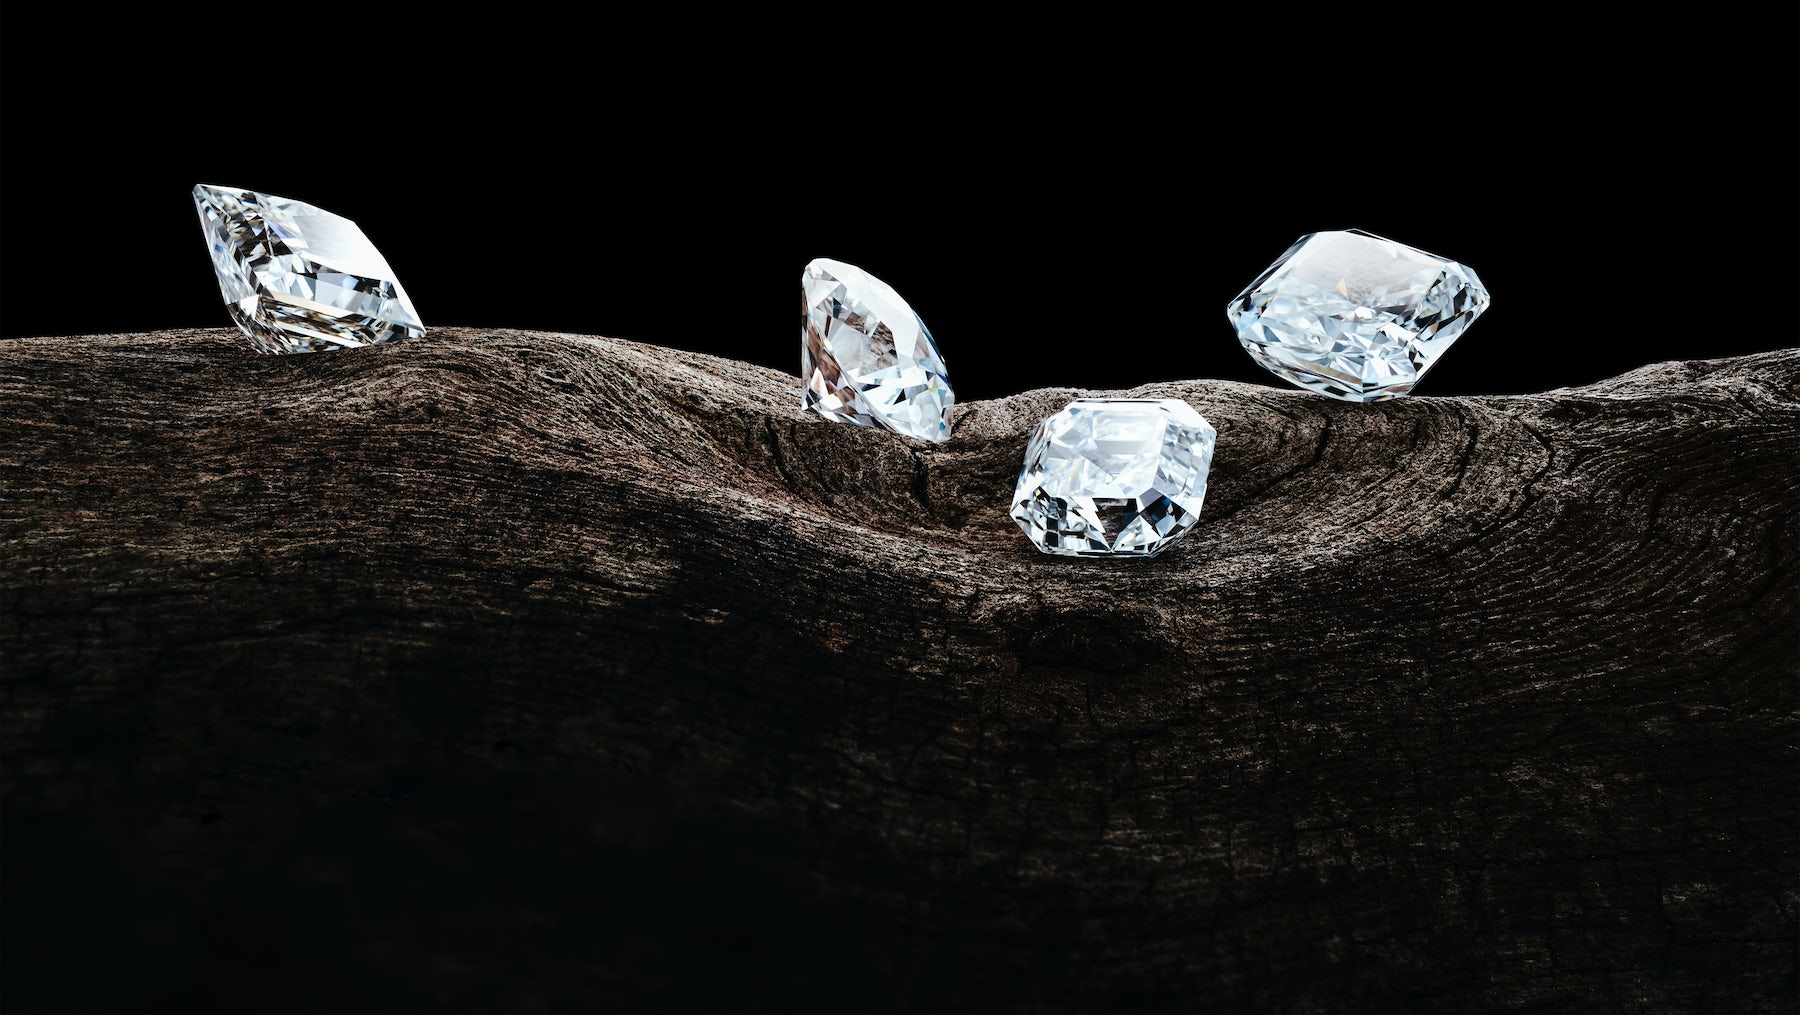 LVMH Luxury Ventures Takes Stake In Lab-Grown Diamond Company Lusix – JCK